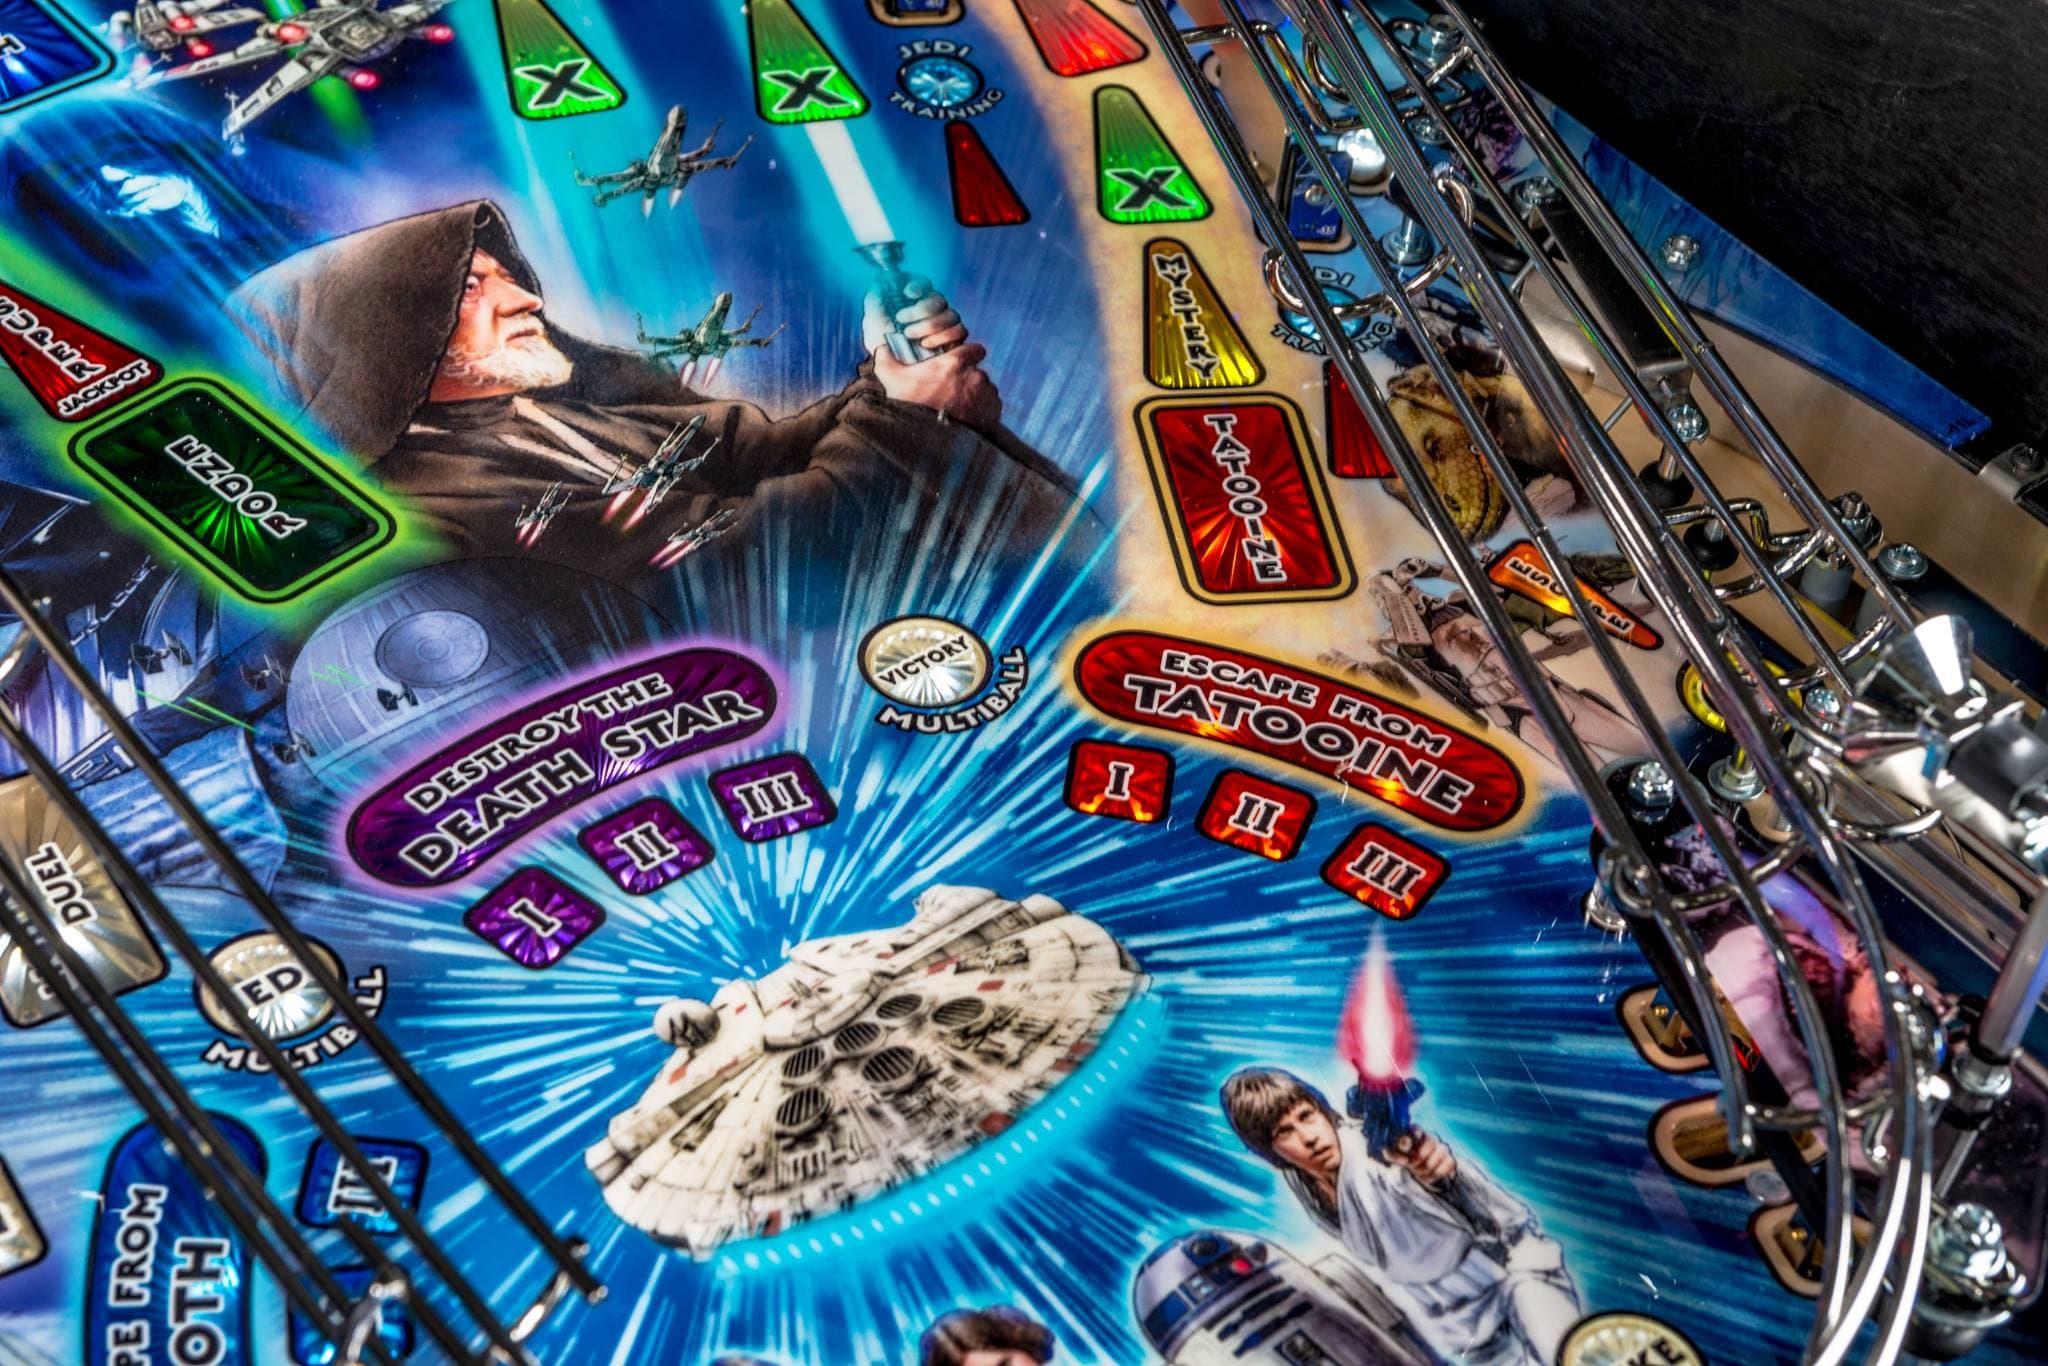 Star Wars Premium Pinball Machine: Obi Wan Kenobi